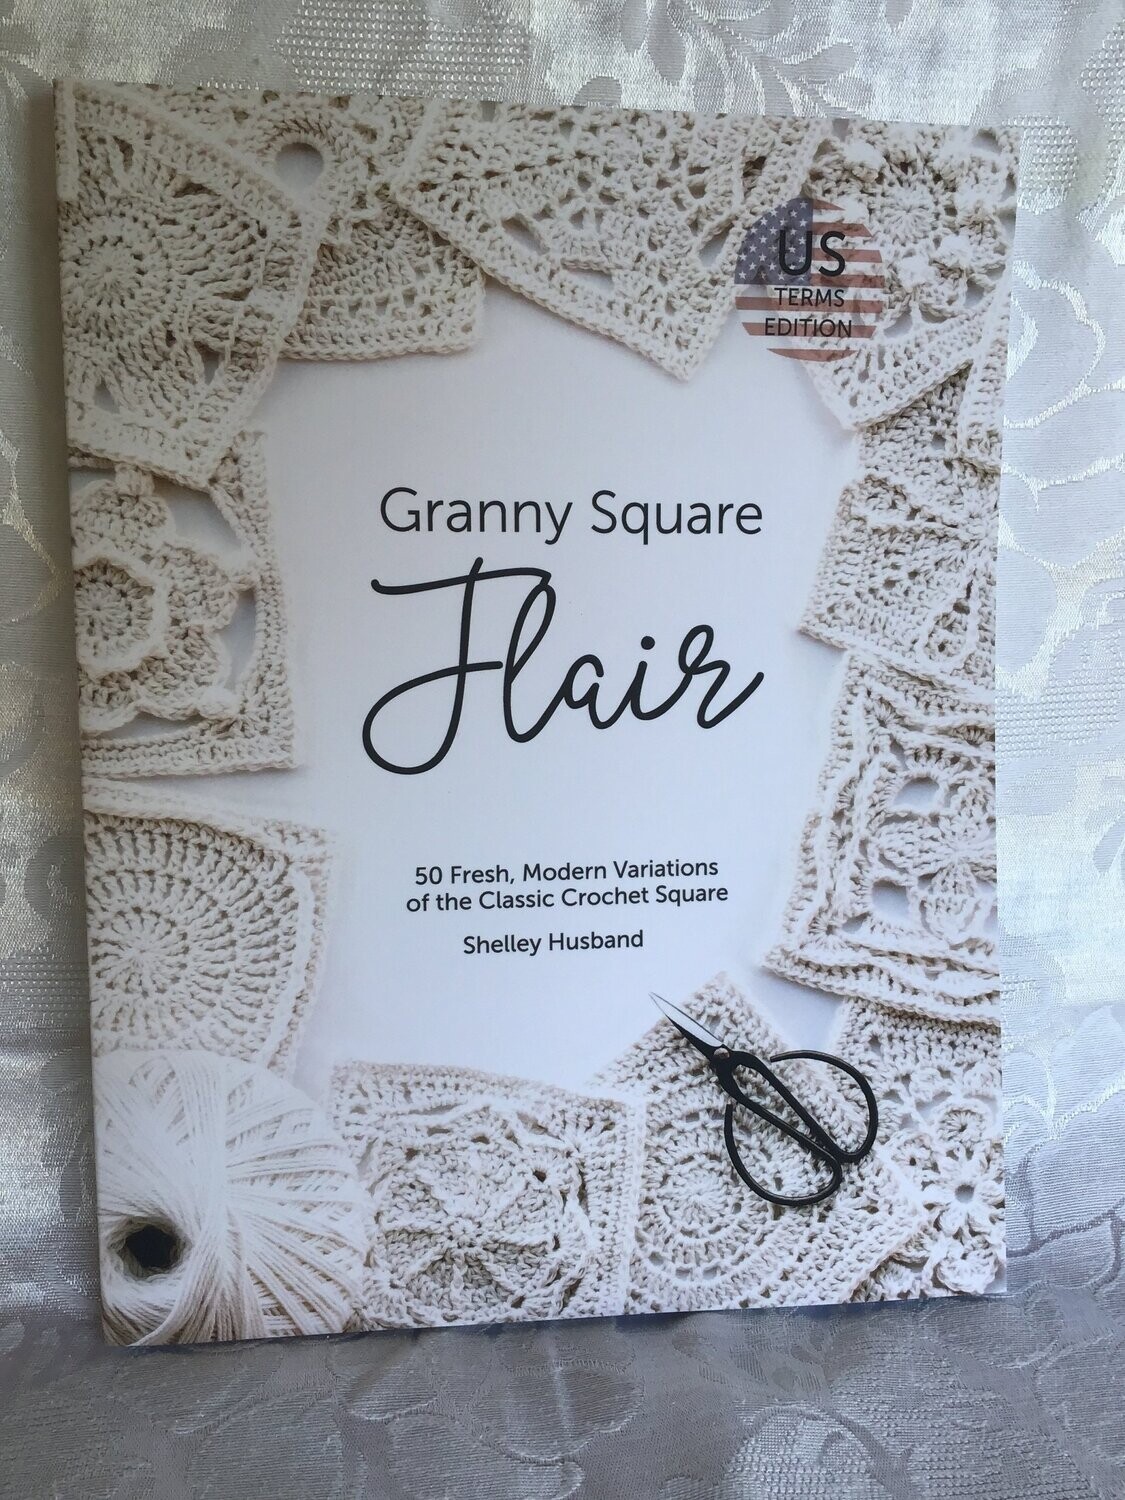 Granny Square Flair - Shelley Husband, Terms: UK